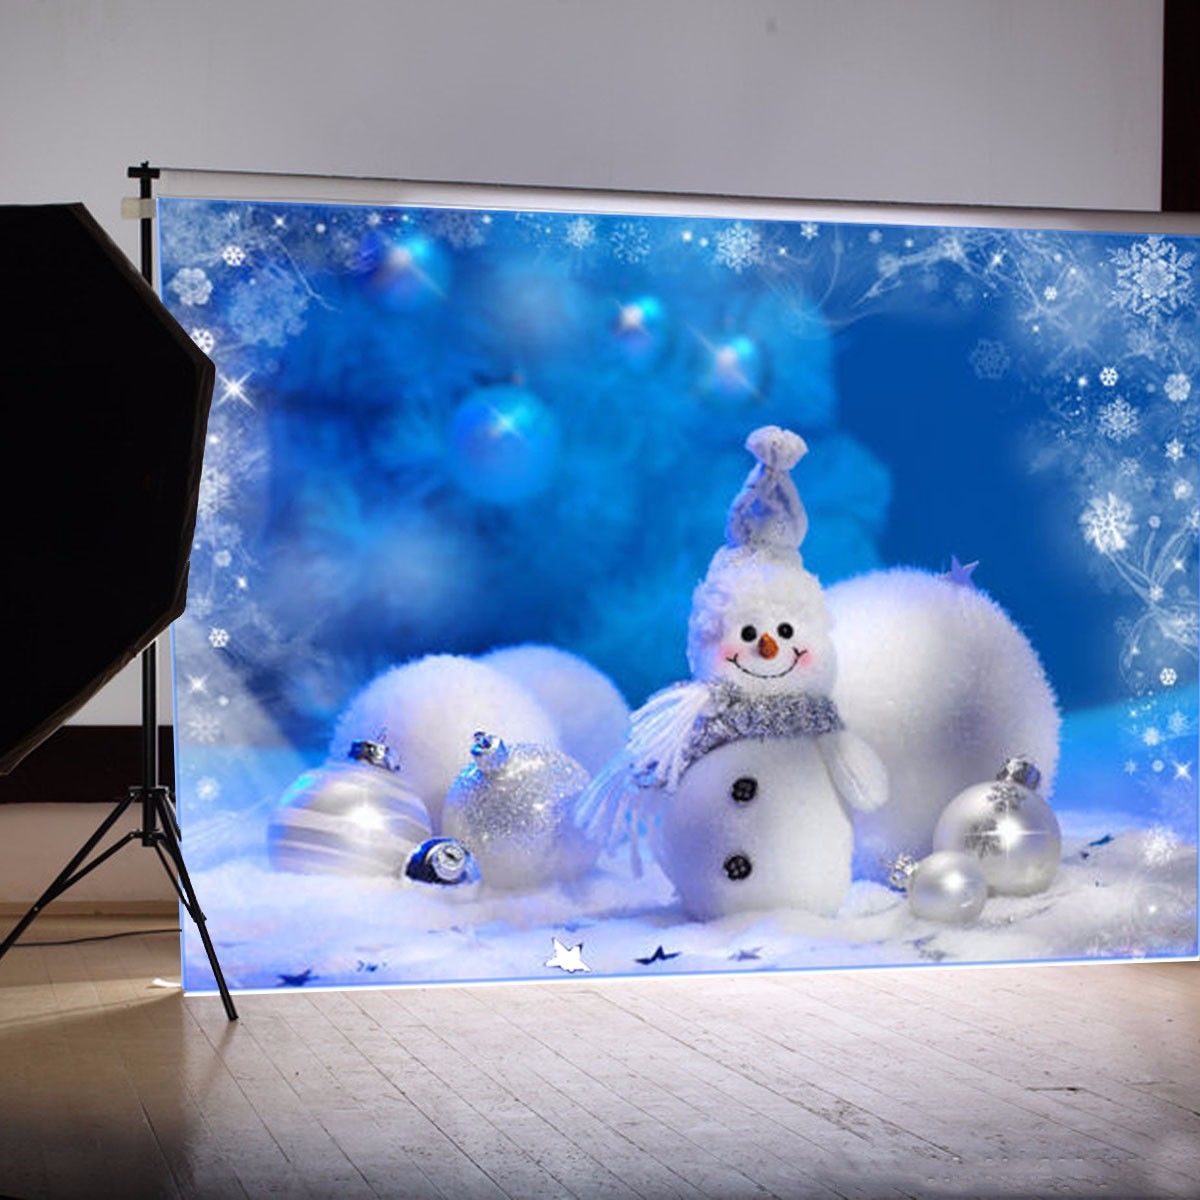 Vinyl-Fabric-Christmas-Snowman-Studio-Photography-Background-Backdrop-1104876